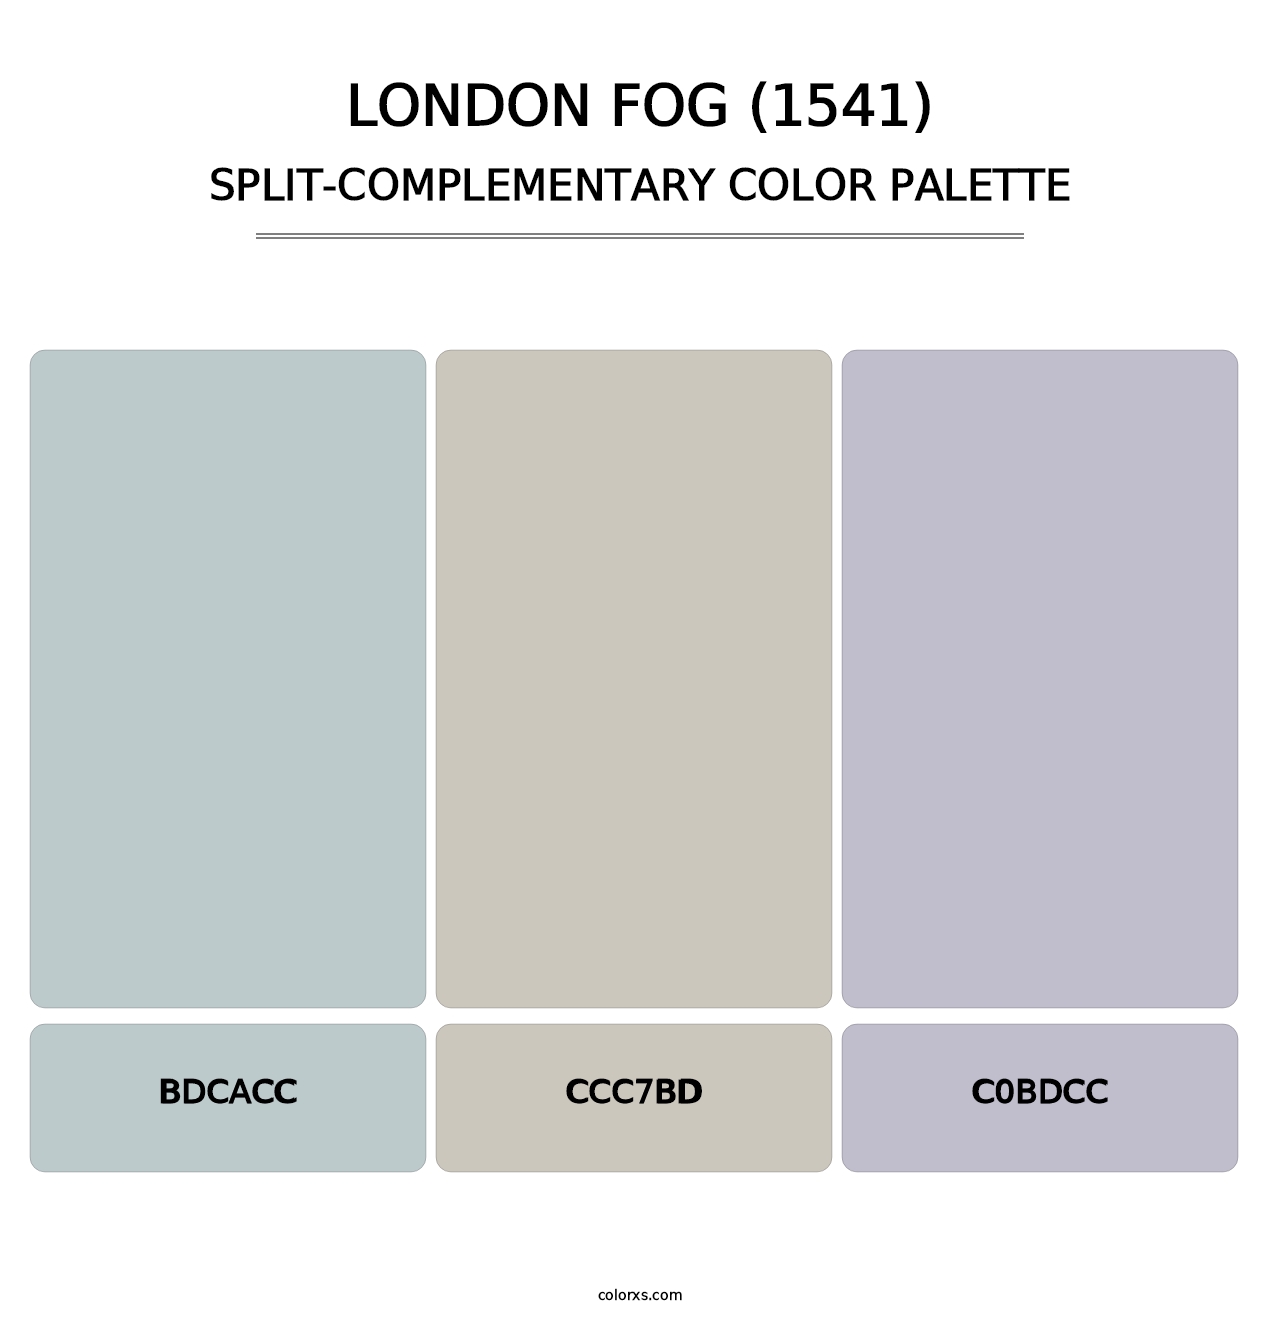 London Fog (1541) - Split-Complementary Color Palette